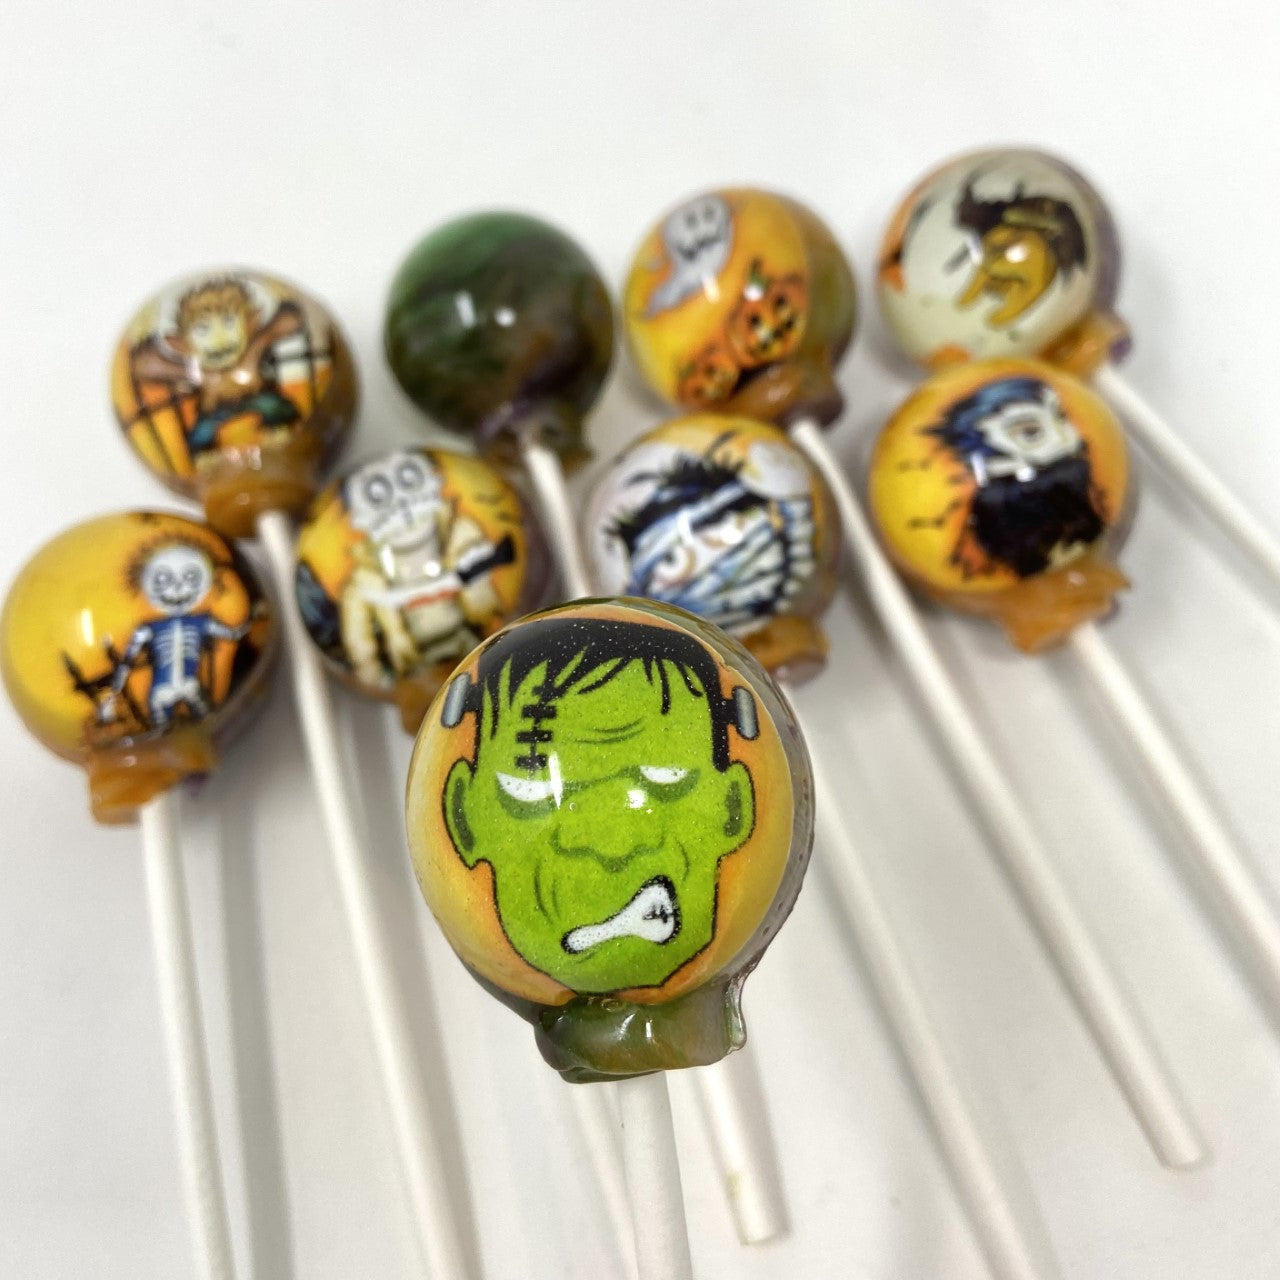 Frank & Friends Lollipops 6-piece set by I Want Candy!